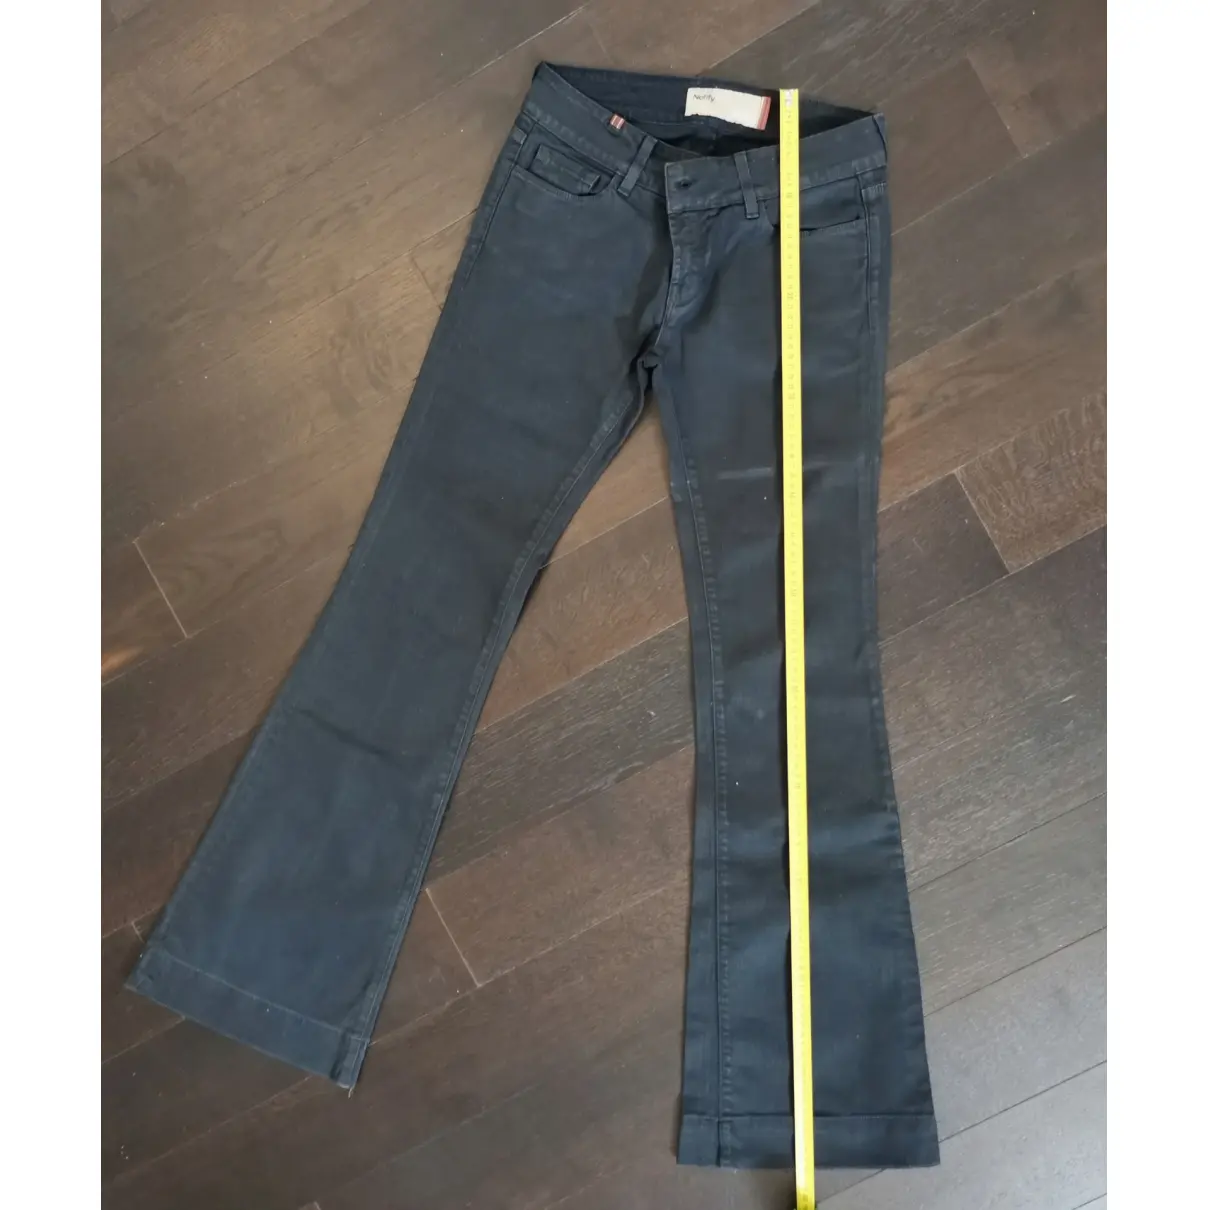 Black Cotton - elasthane Jeans Notify